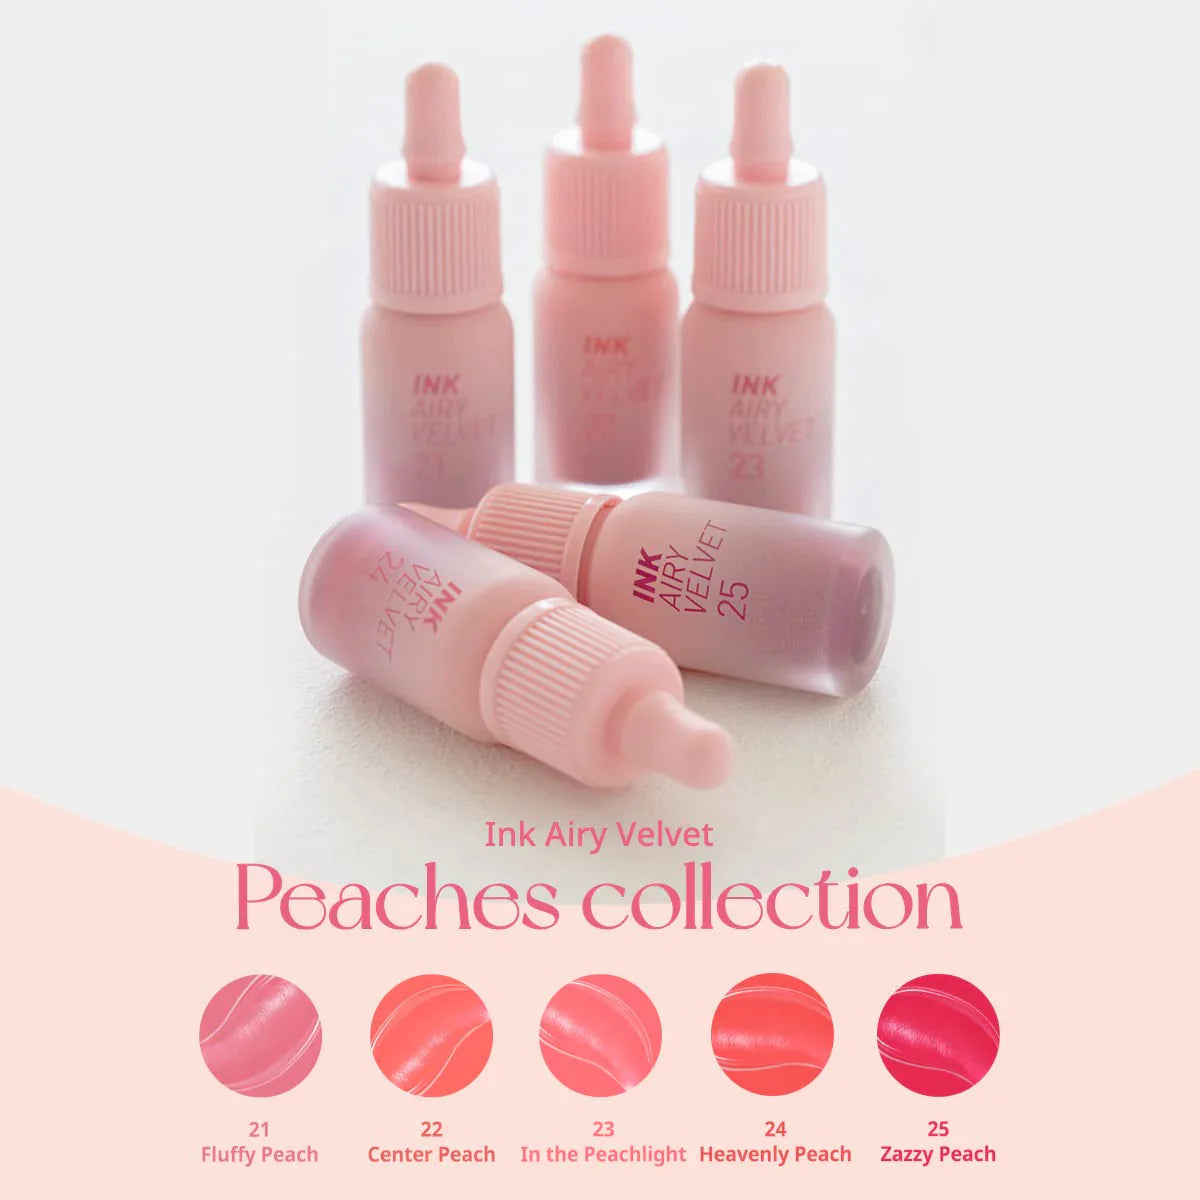 PERIPERA Ink Airy Velvet #23 Peachlight Lip Tint 4g New Peaches Edition